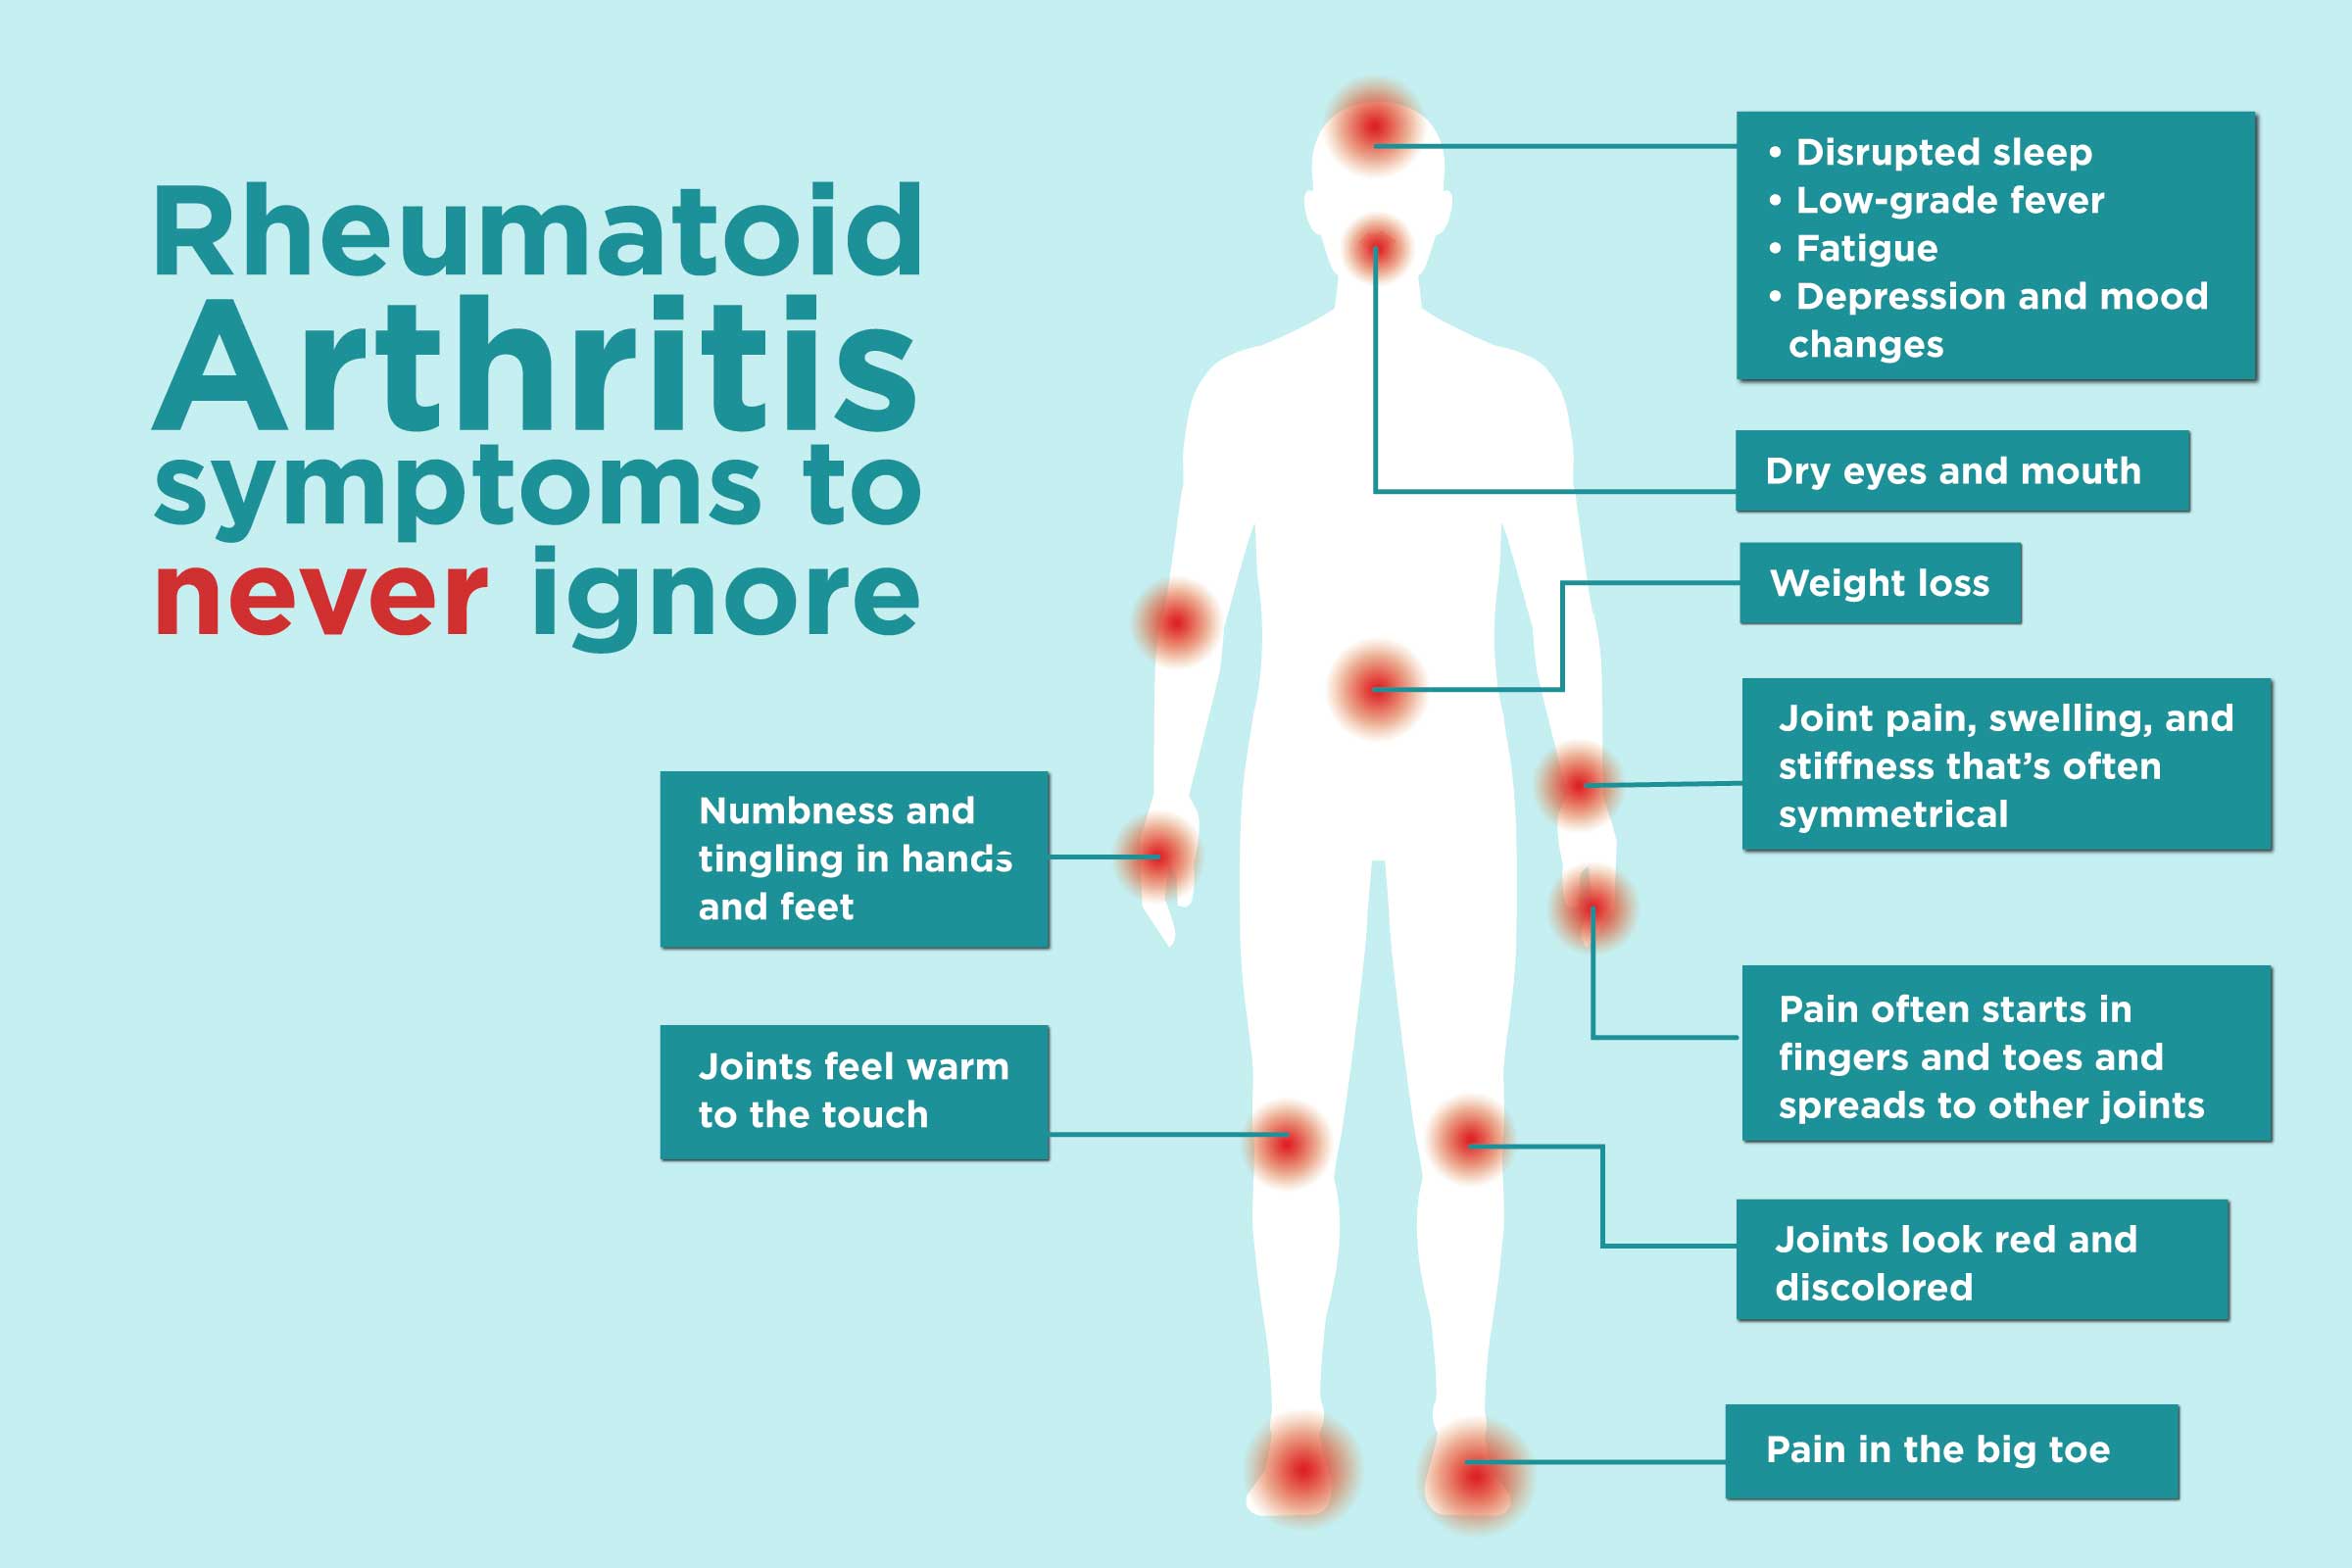 Rheumatoid arthritis treatment: the earlier the better to prevent joint damage | RMD Open